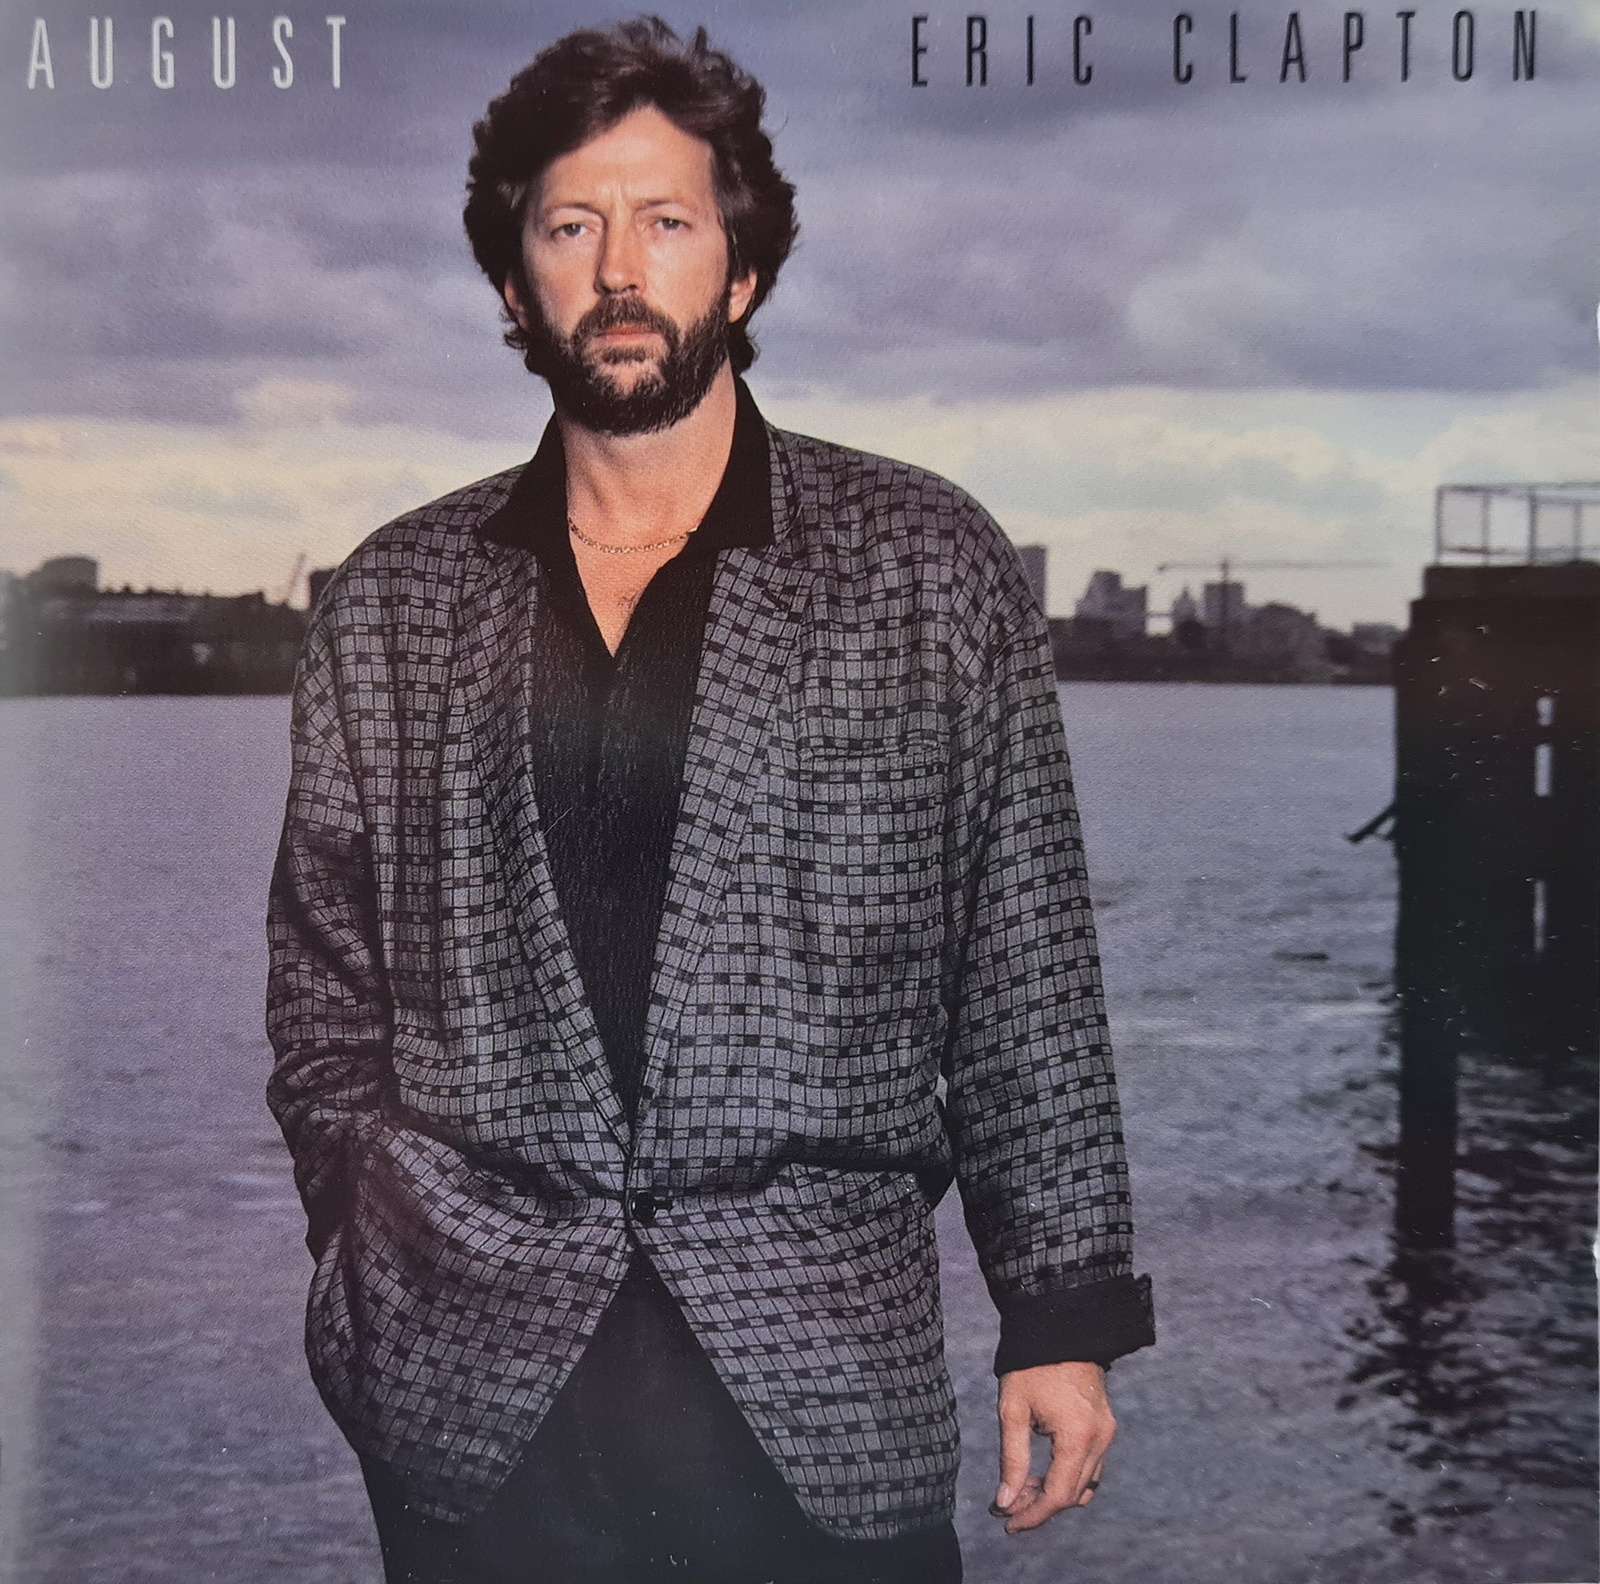 Eric Clapton - August CD